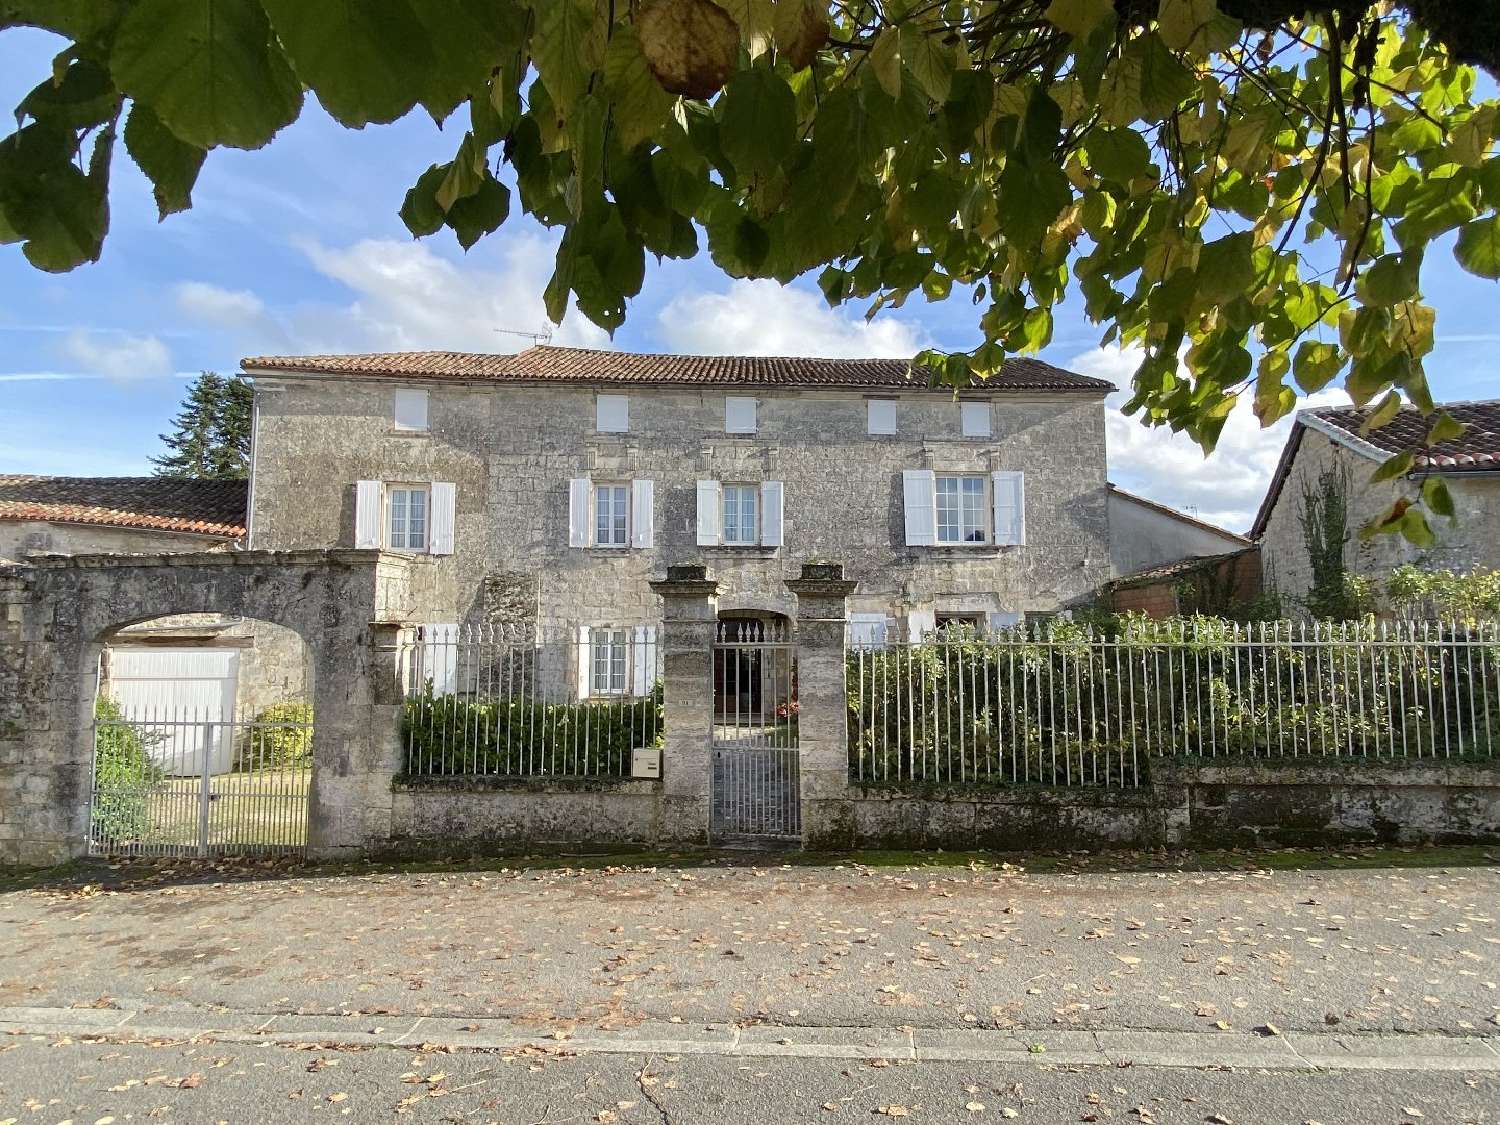  à vendre maison Angoulême Charente 1